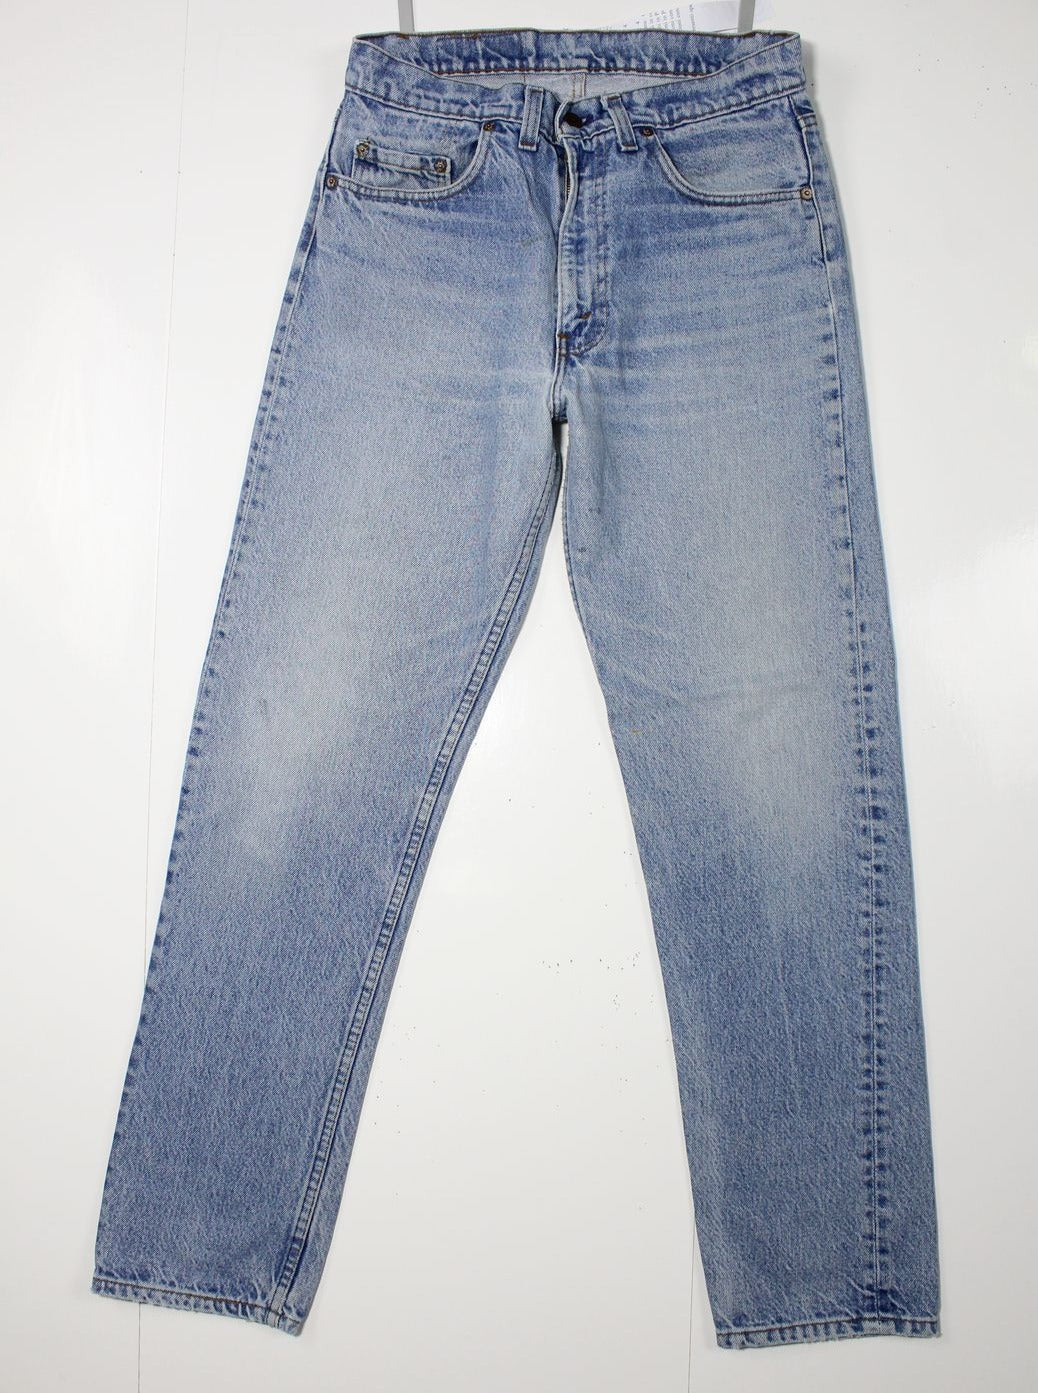 Levi's 505 W33 L32 Denim Made In USA Jeans Vintage